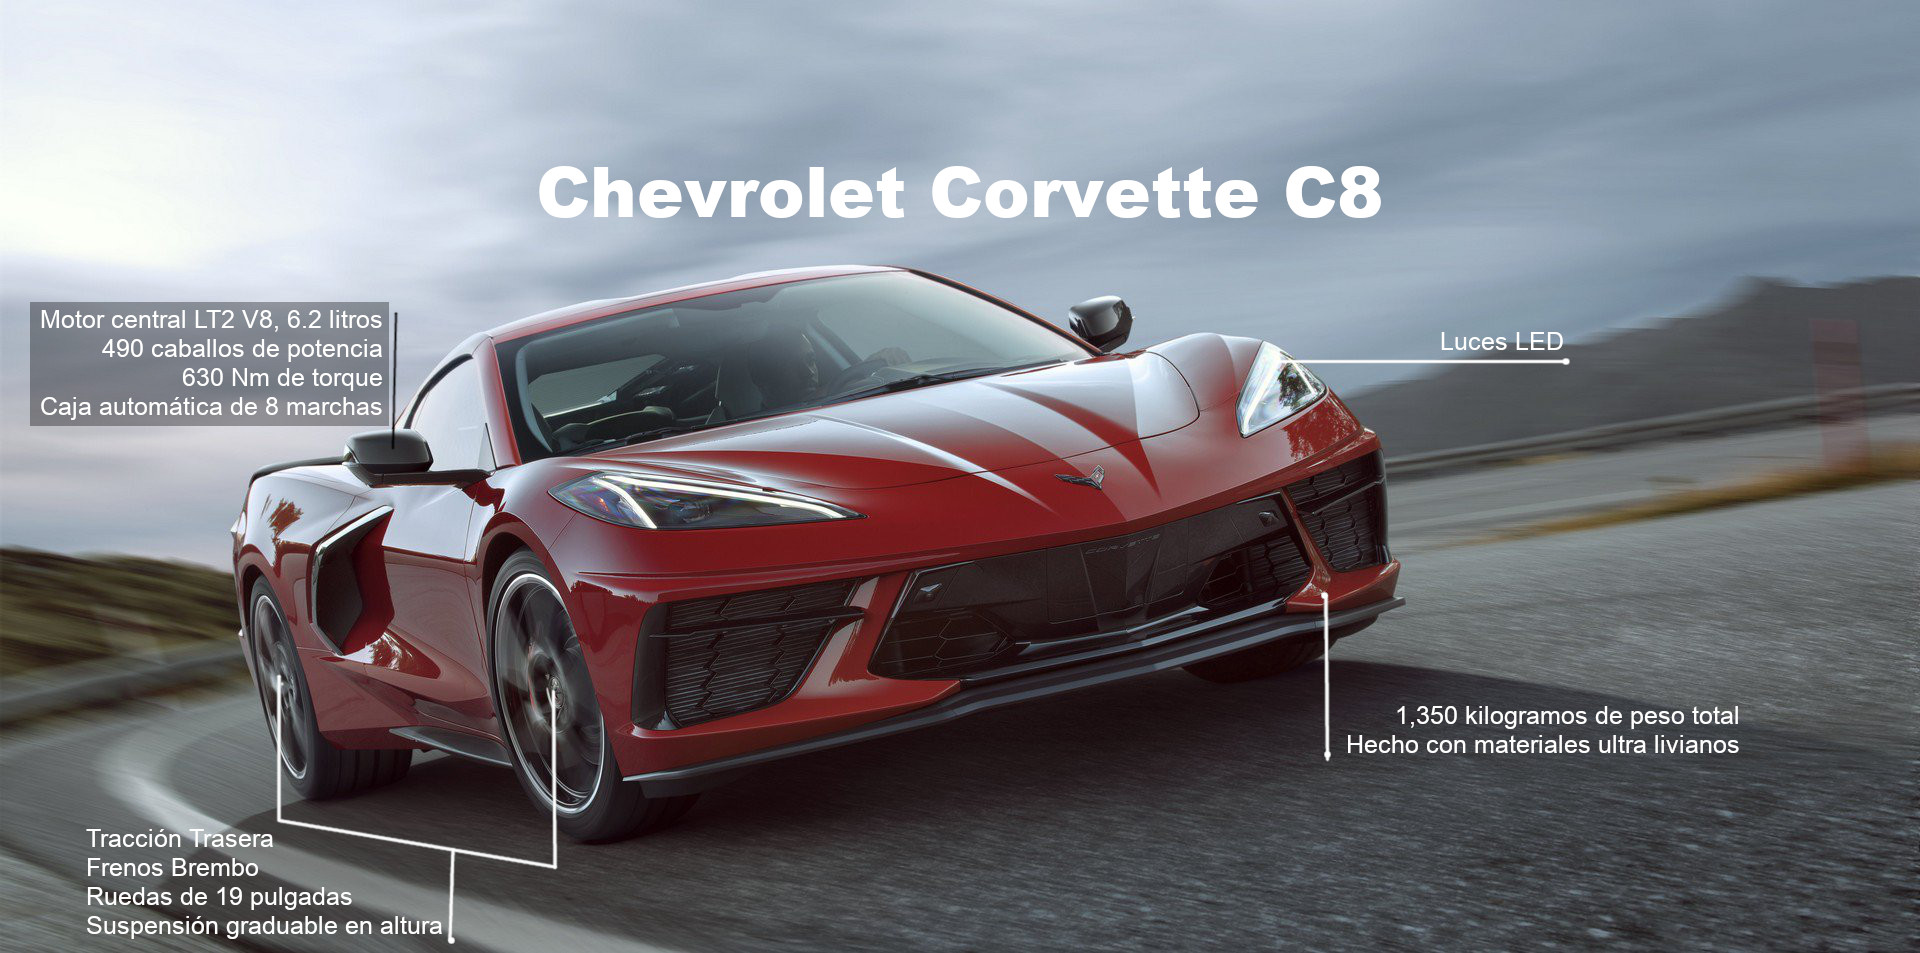 Chevrolet Corvette C8: Infografía